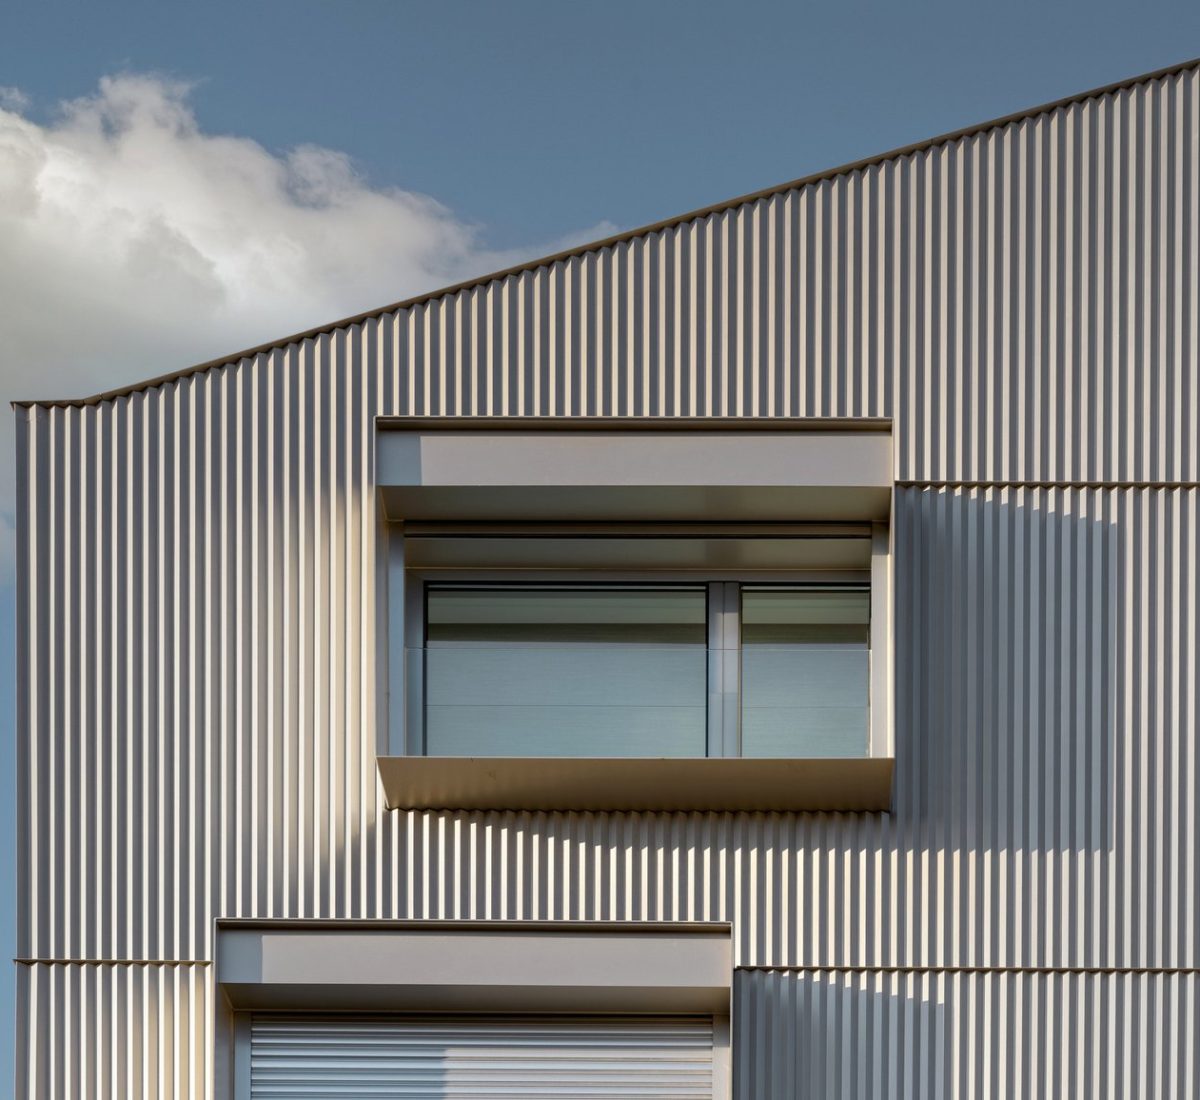 Revestimiento exterior de aluminio para la arquitectura